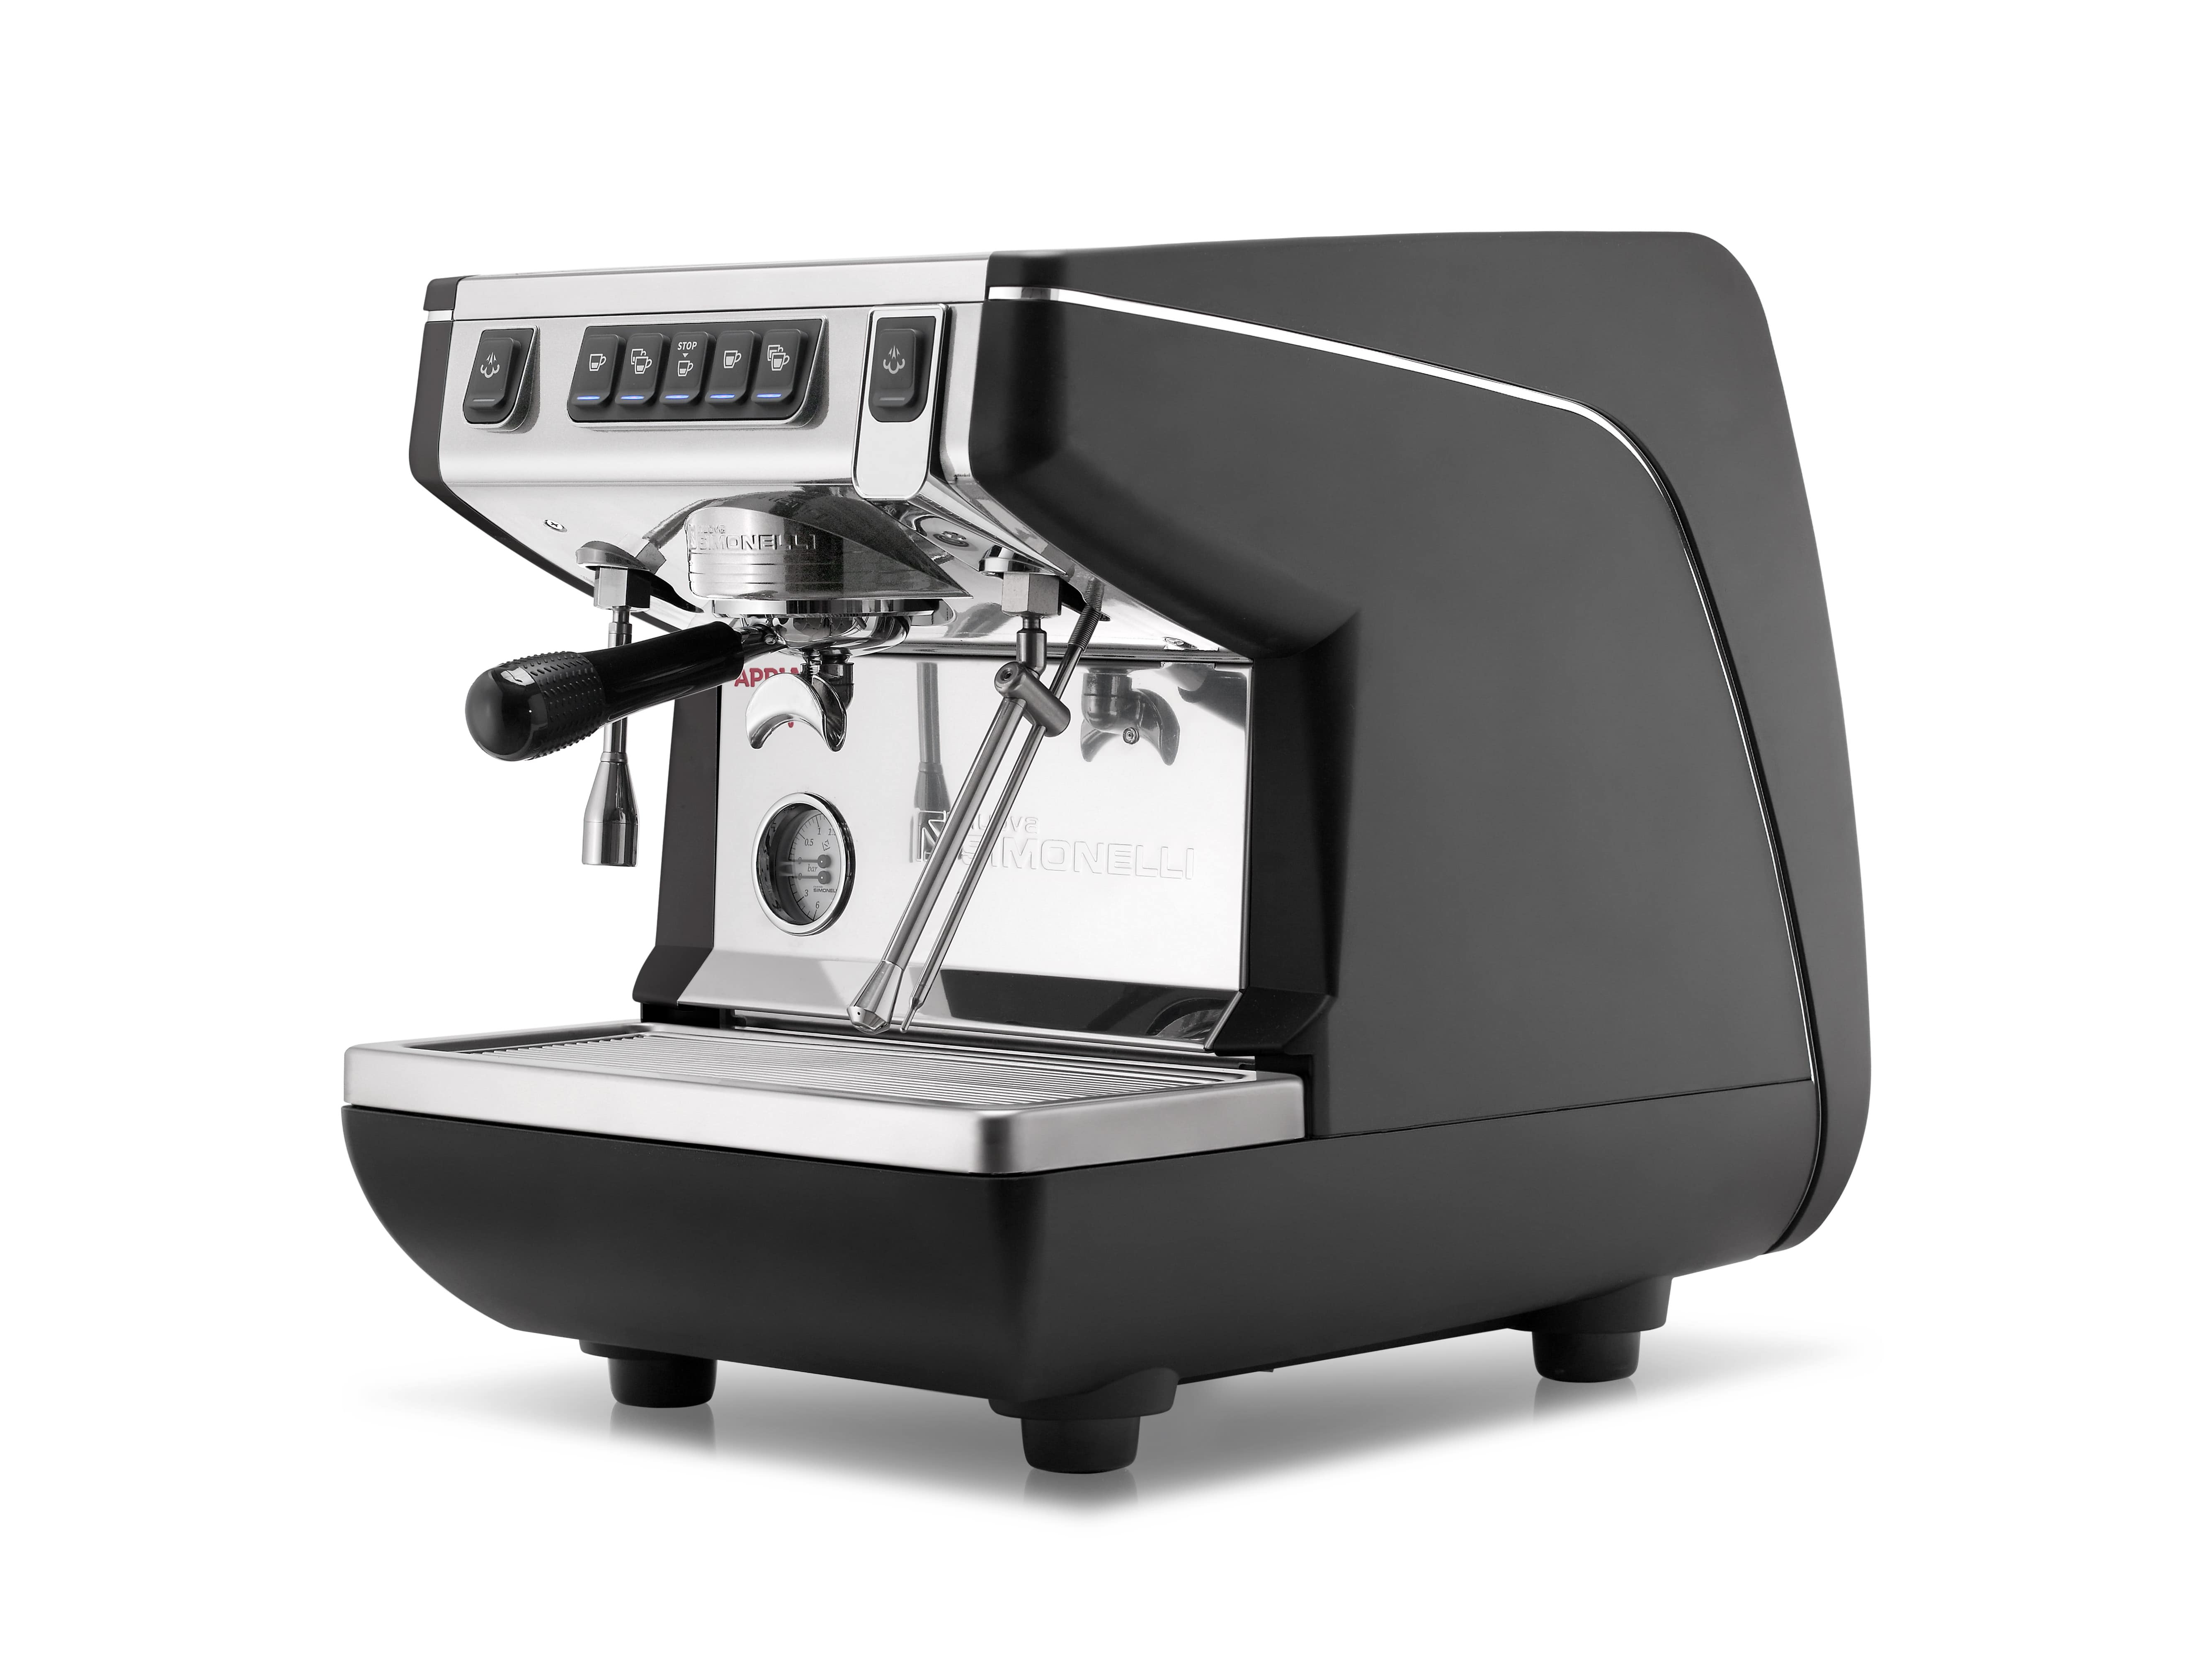 APPIA LIFE VOLUMETRIC commercial espresso machine